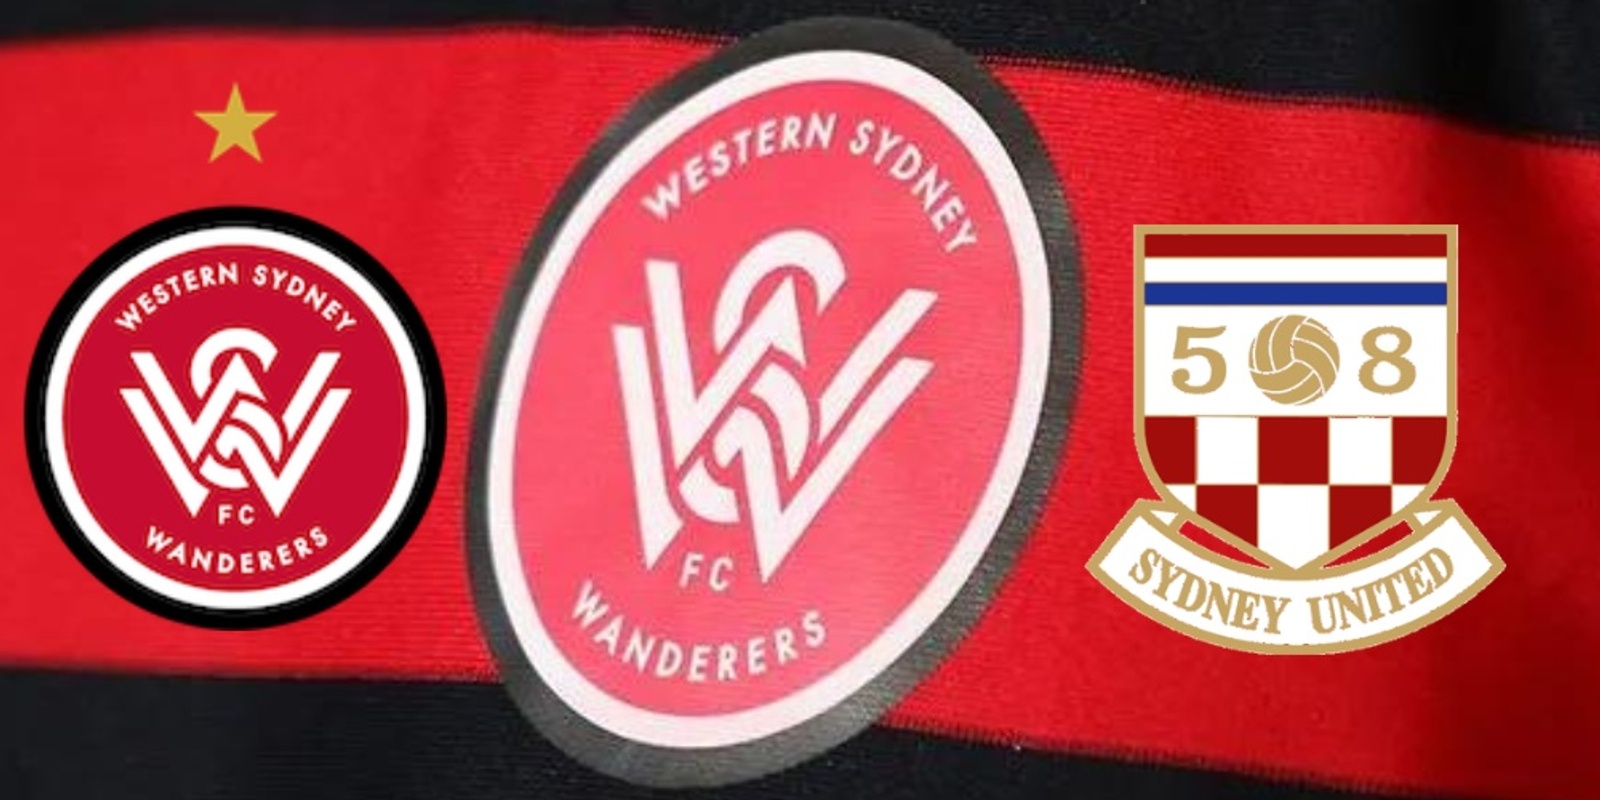 Banner image for Western Sydney Wanderers FC vs Sydney United 58 FC